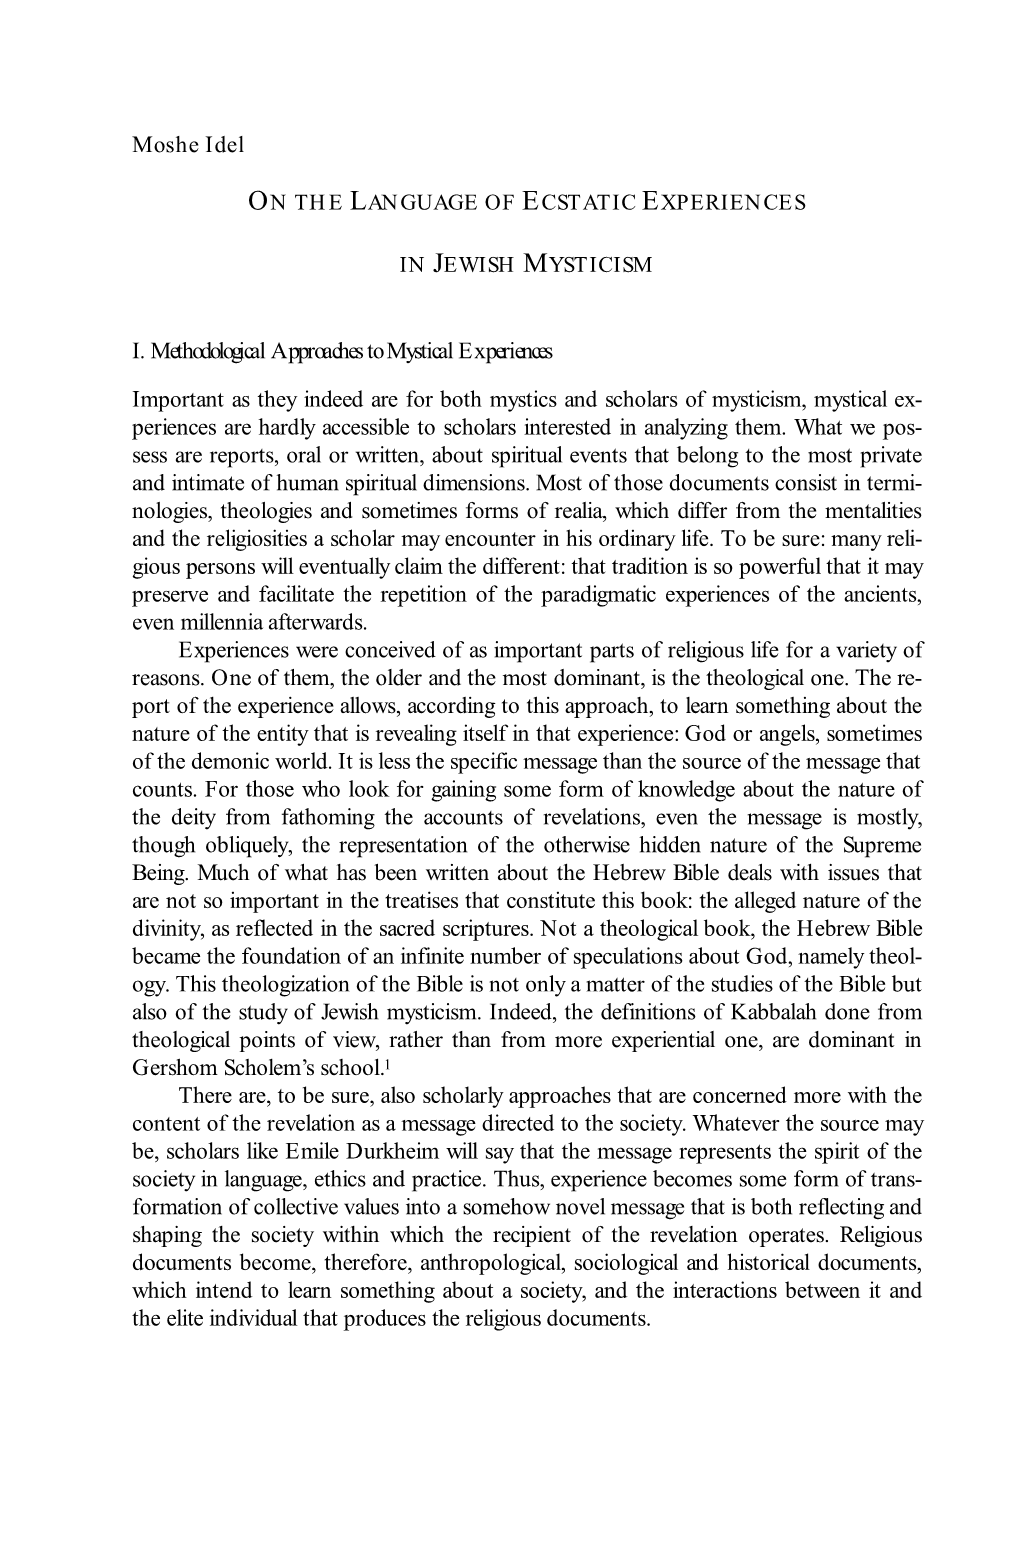 Moshe Idel I. Methodological Approaches to Mystical